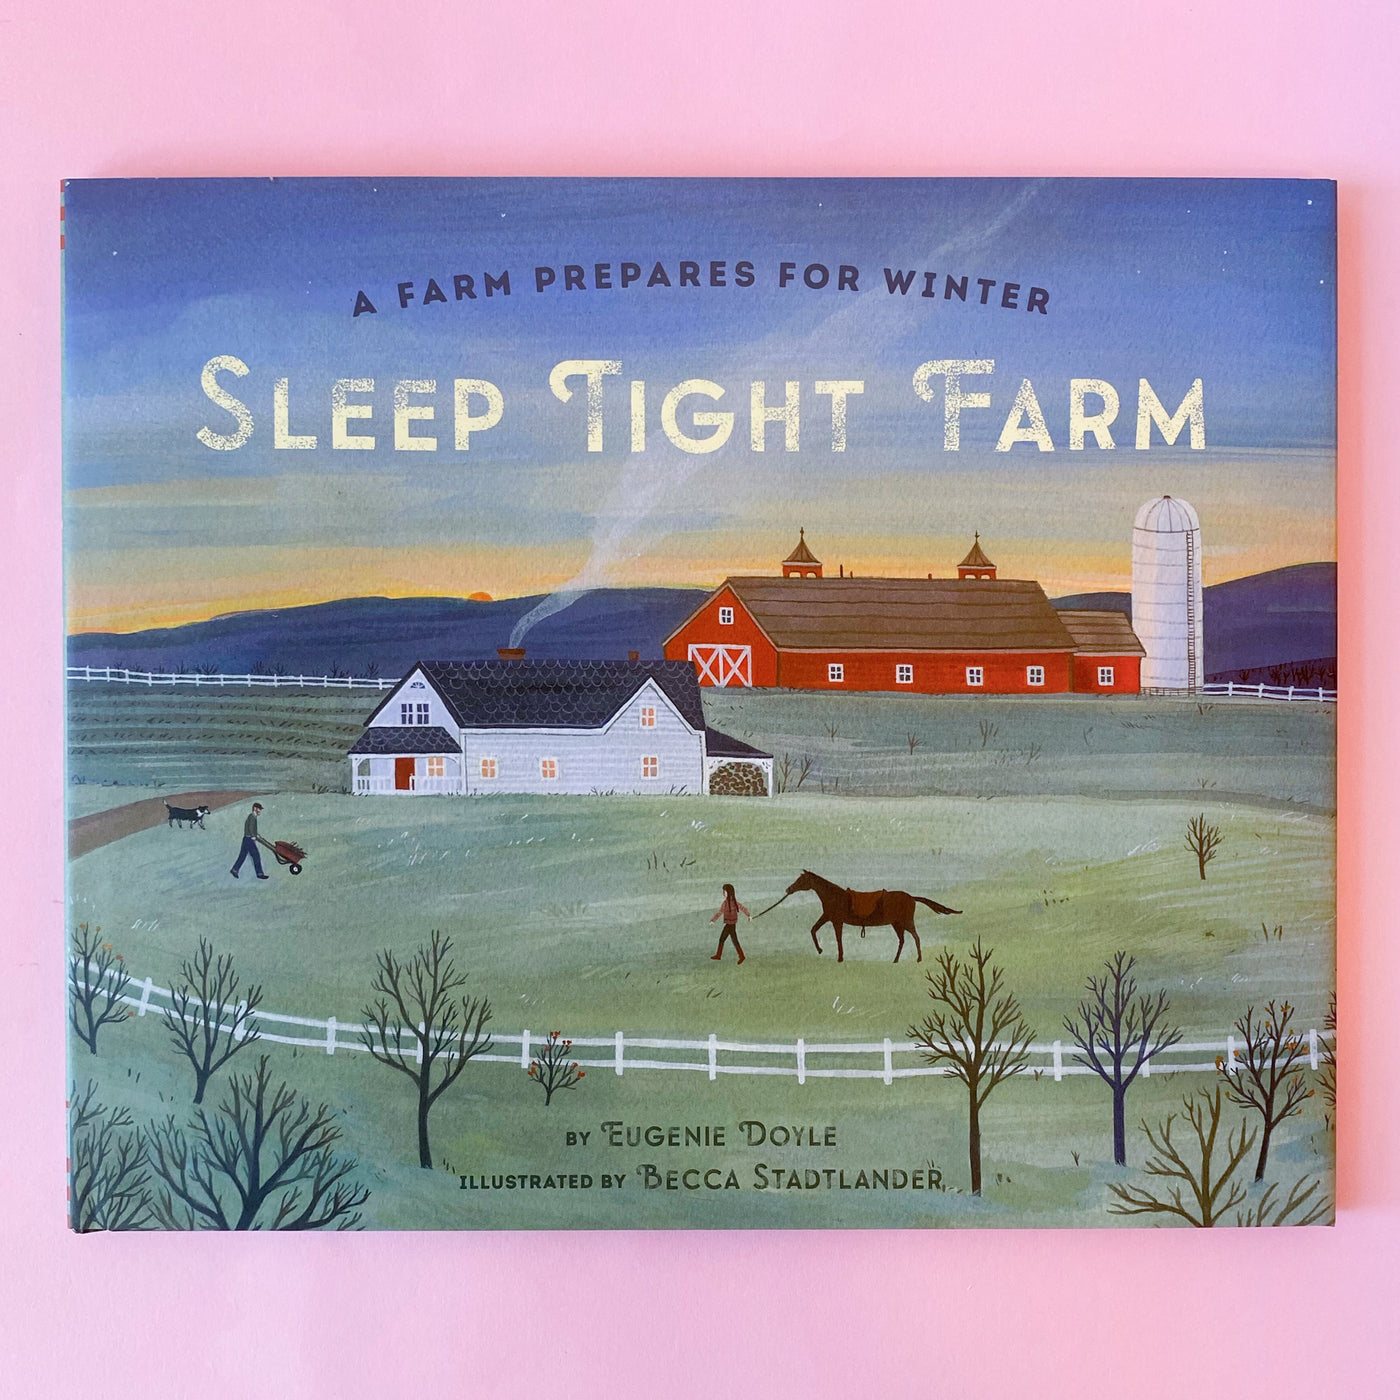 Sleep Tight Farm by Eugenie Doyle and Becca Stadtlander